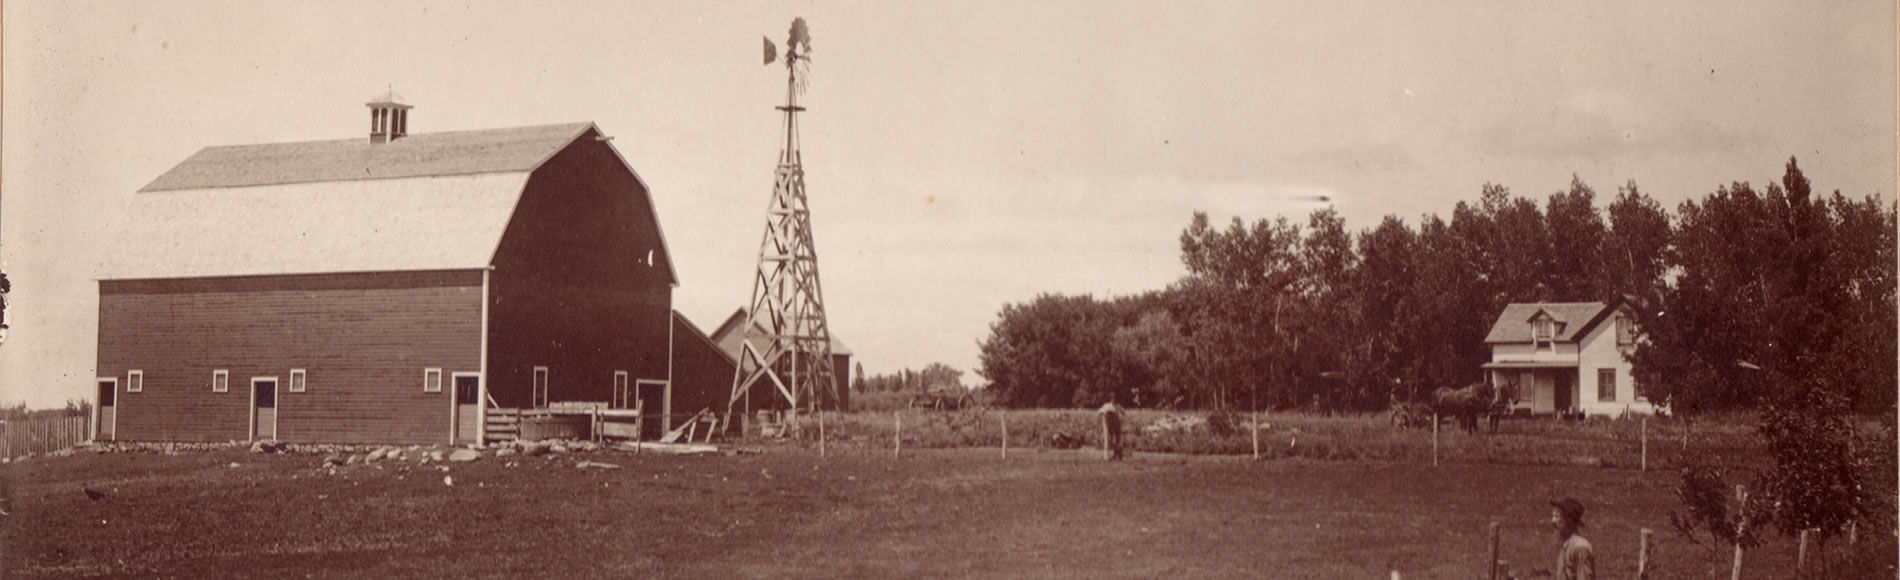 Jens Blixrud Farm - 1903